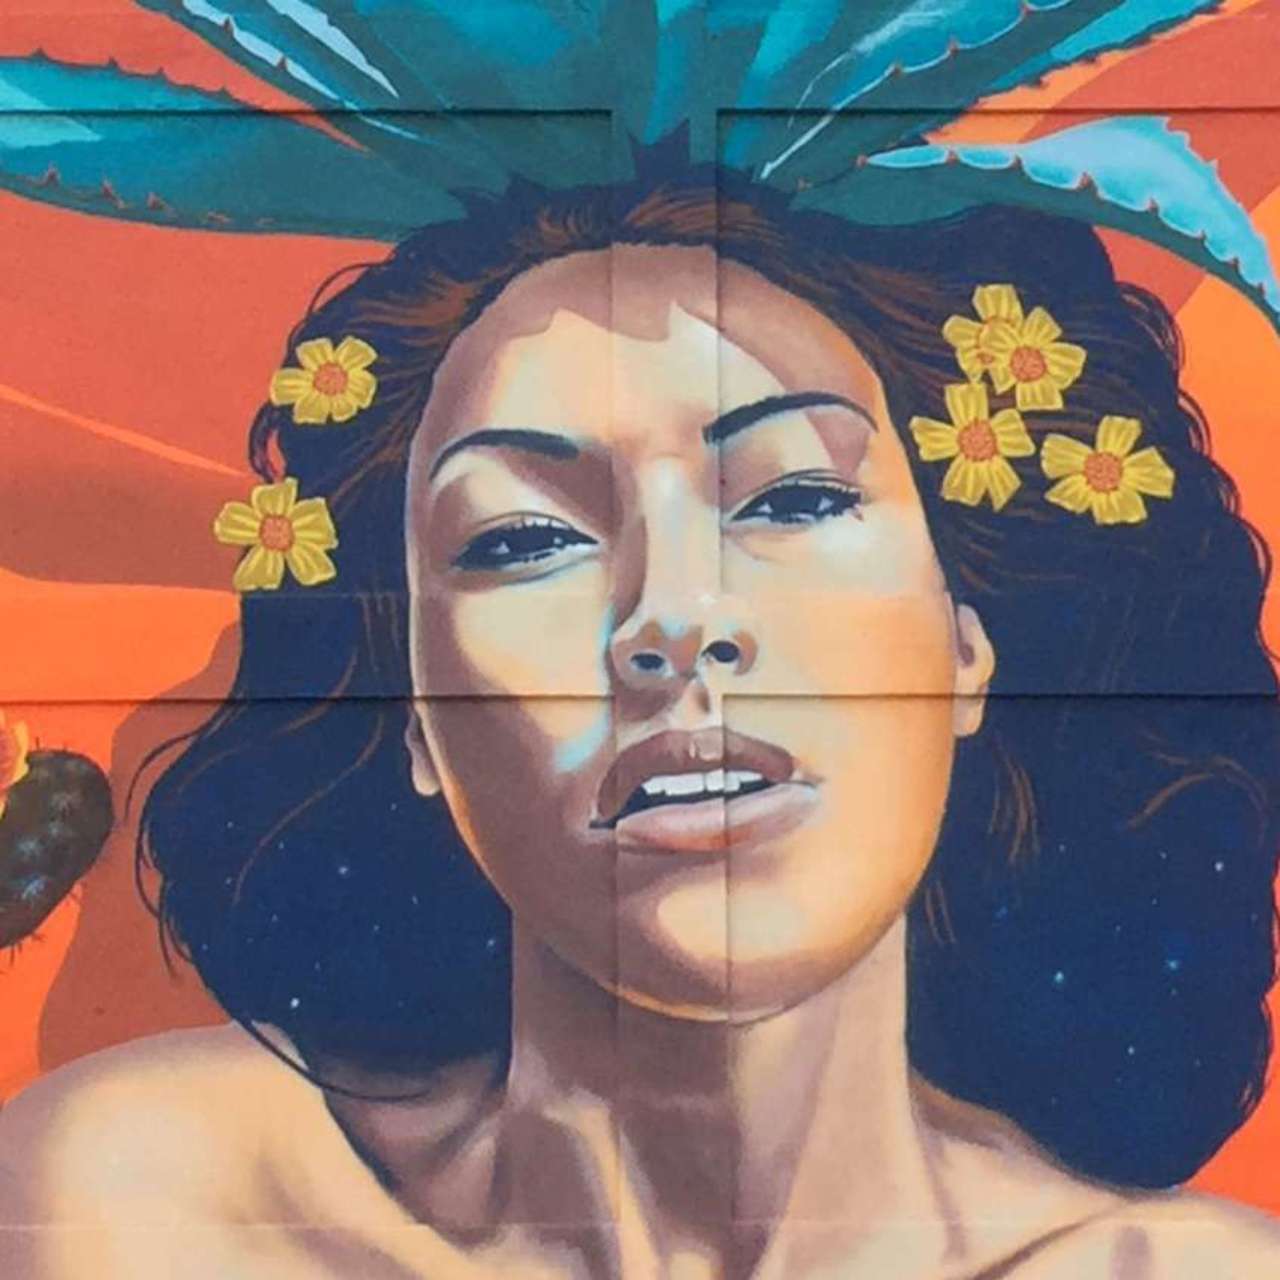 Mayahuel (Goddess of Agave)#Streetart by Rock "Cyfi" Martinez#Mural #Graffiti #Tucson #Arizona https://t.co/8mRMuXJmQI